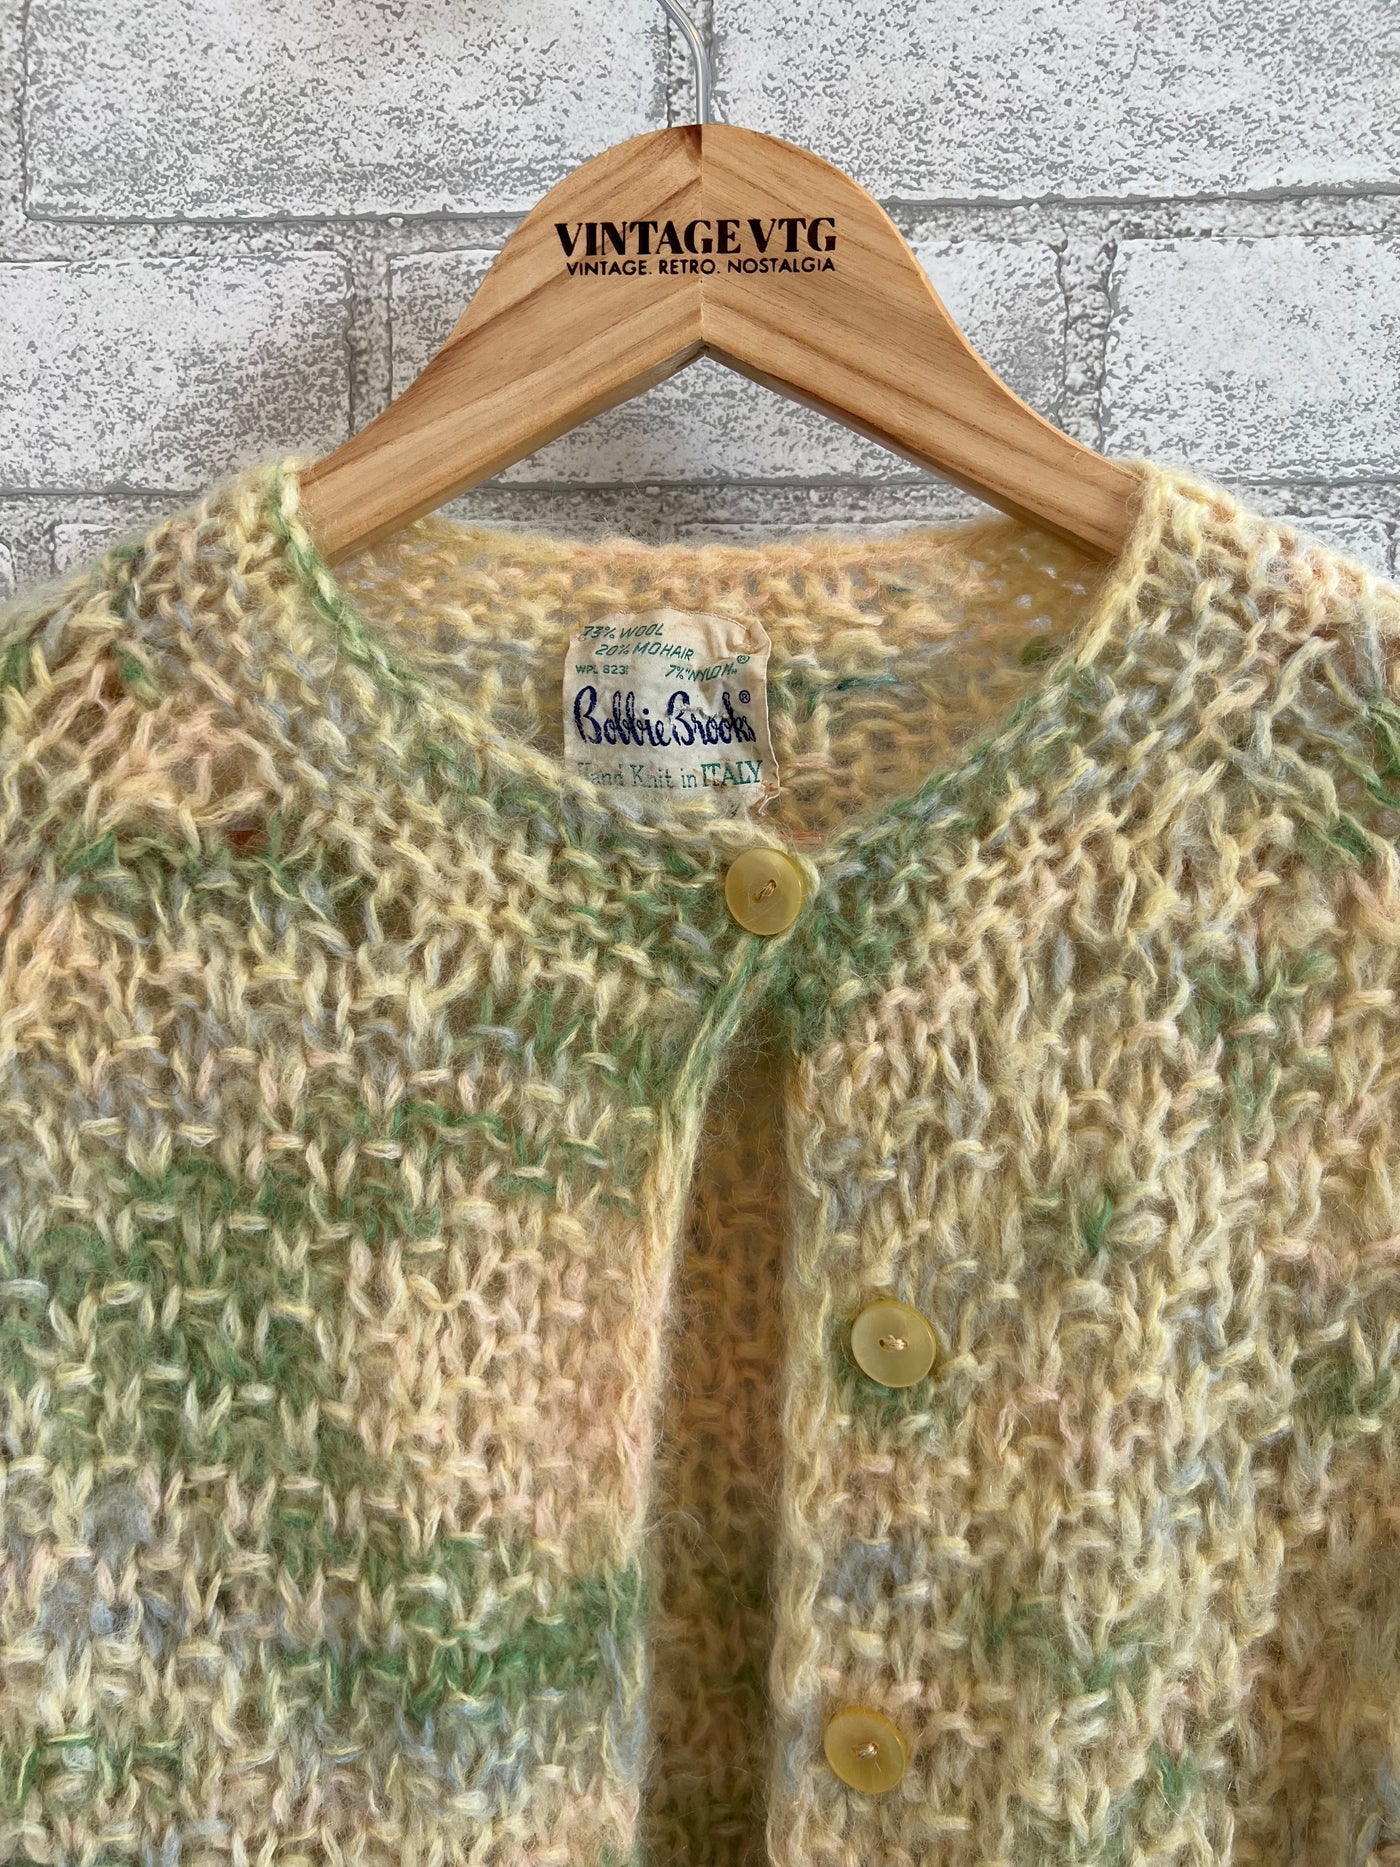 Vintage Women's Bobbie Brooks 60's Knit wool Cardigan Sweater